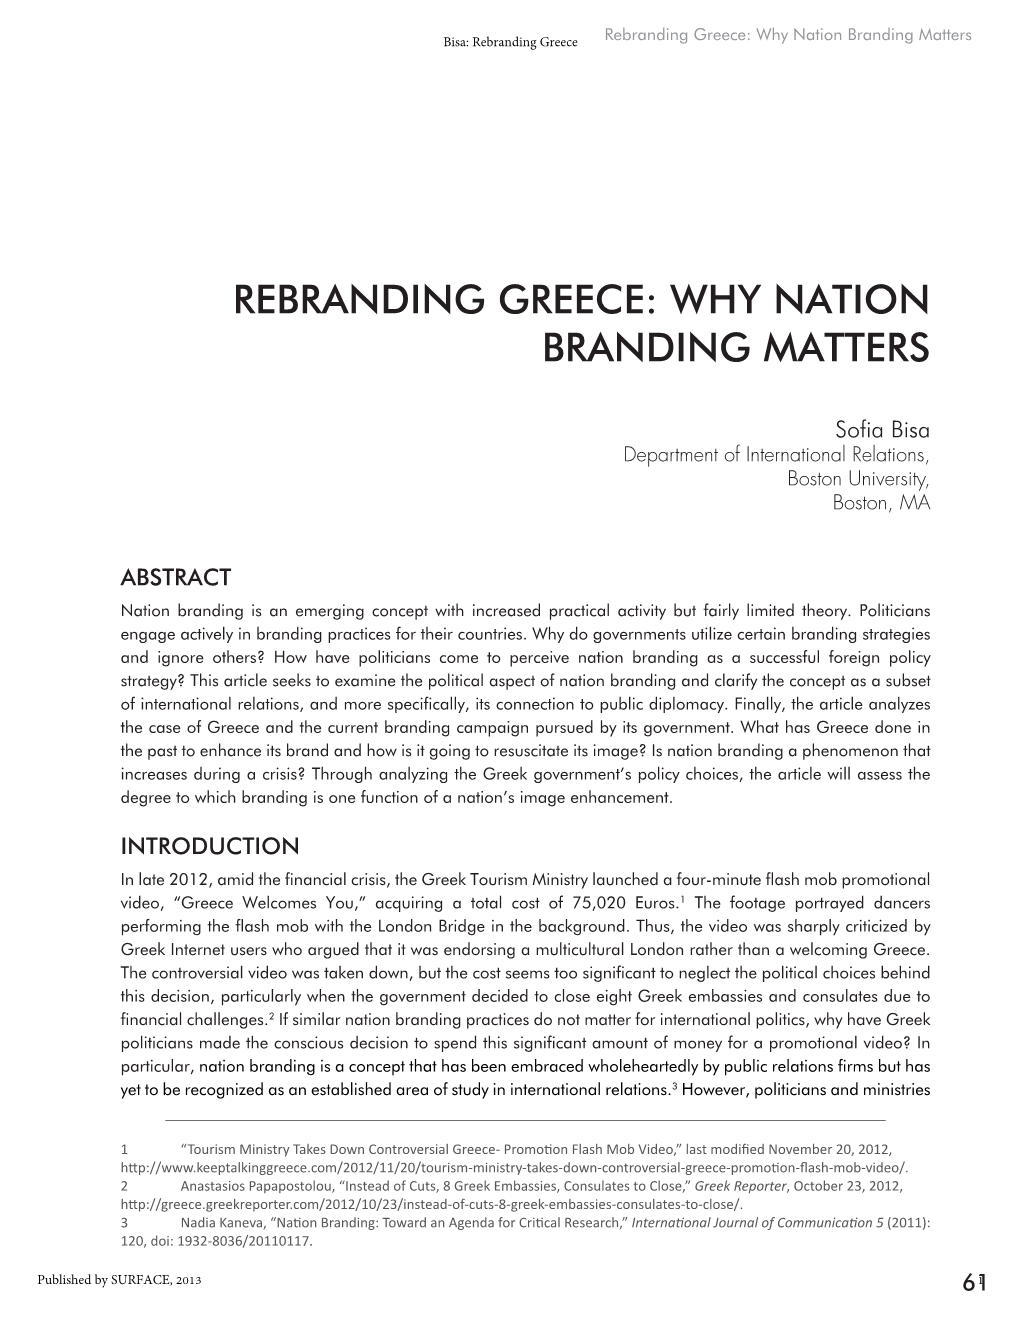 Rebranding Greece: Why Nation Branding Matters